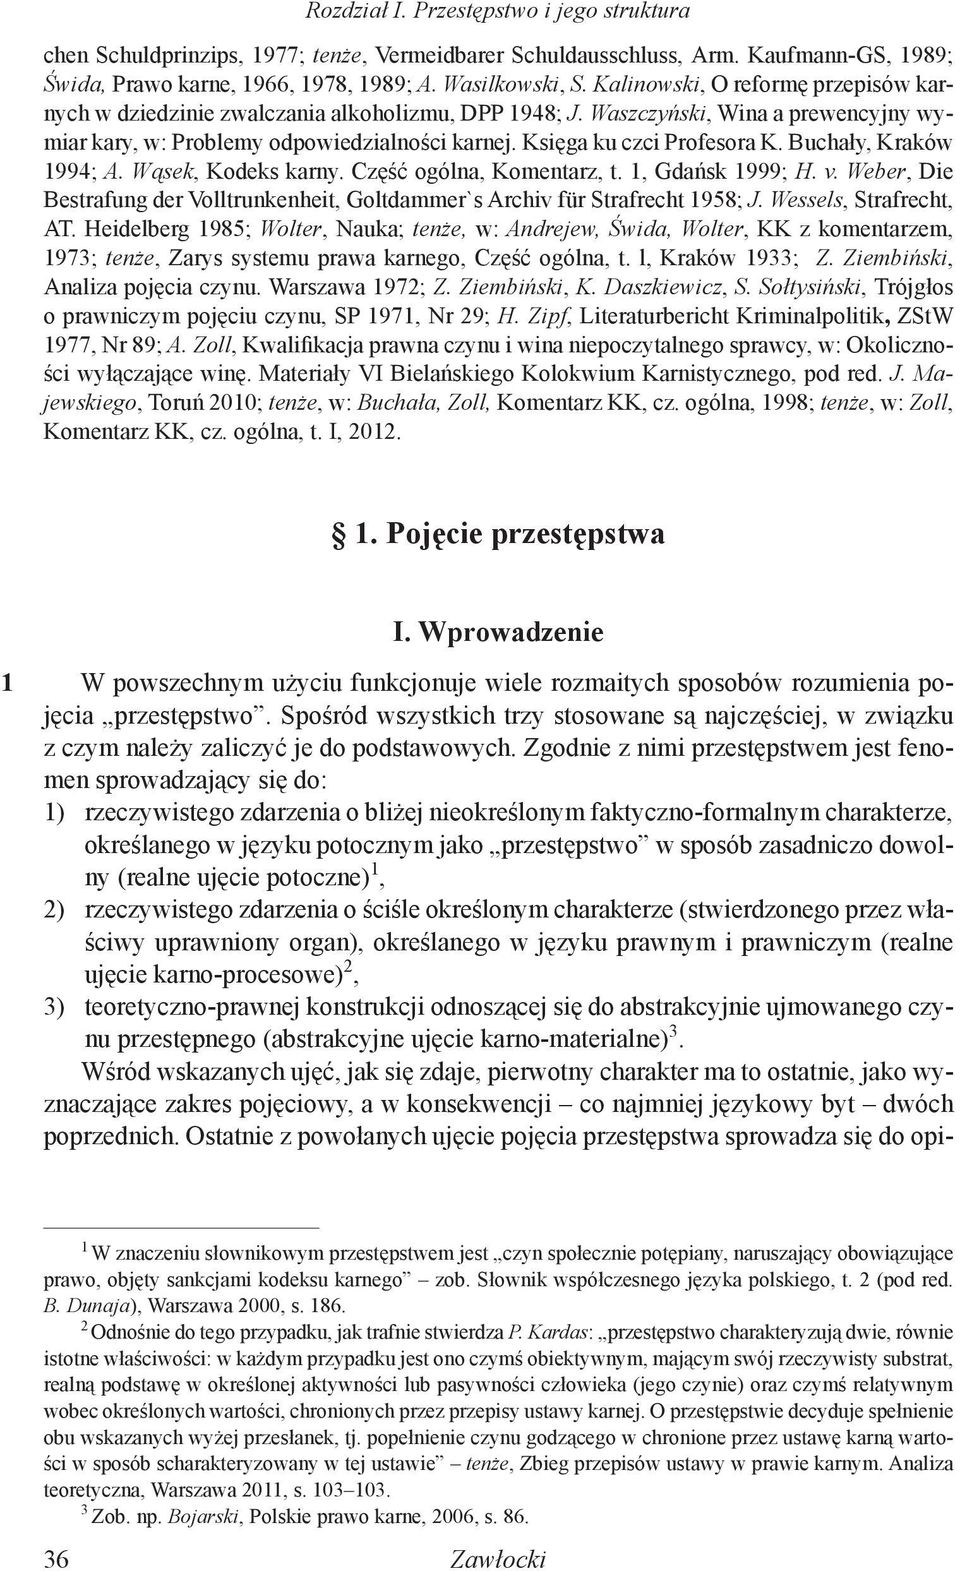 Buchały, Kraków 1994; A. Wąsek, Kodeks karny. Część ogólna, Komentarz, t. 1, Gdańsk 1999; H. v. Weber, Die Bestrafung der Volltrunkenheit, Goltdammer`s Archiv für Strafrecht 1958; J.